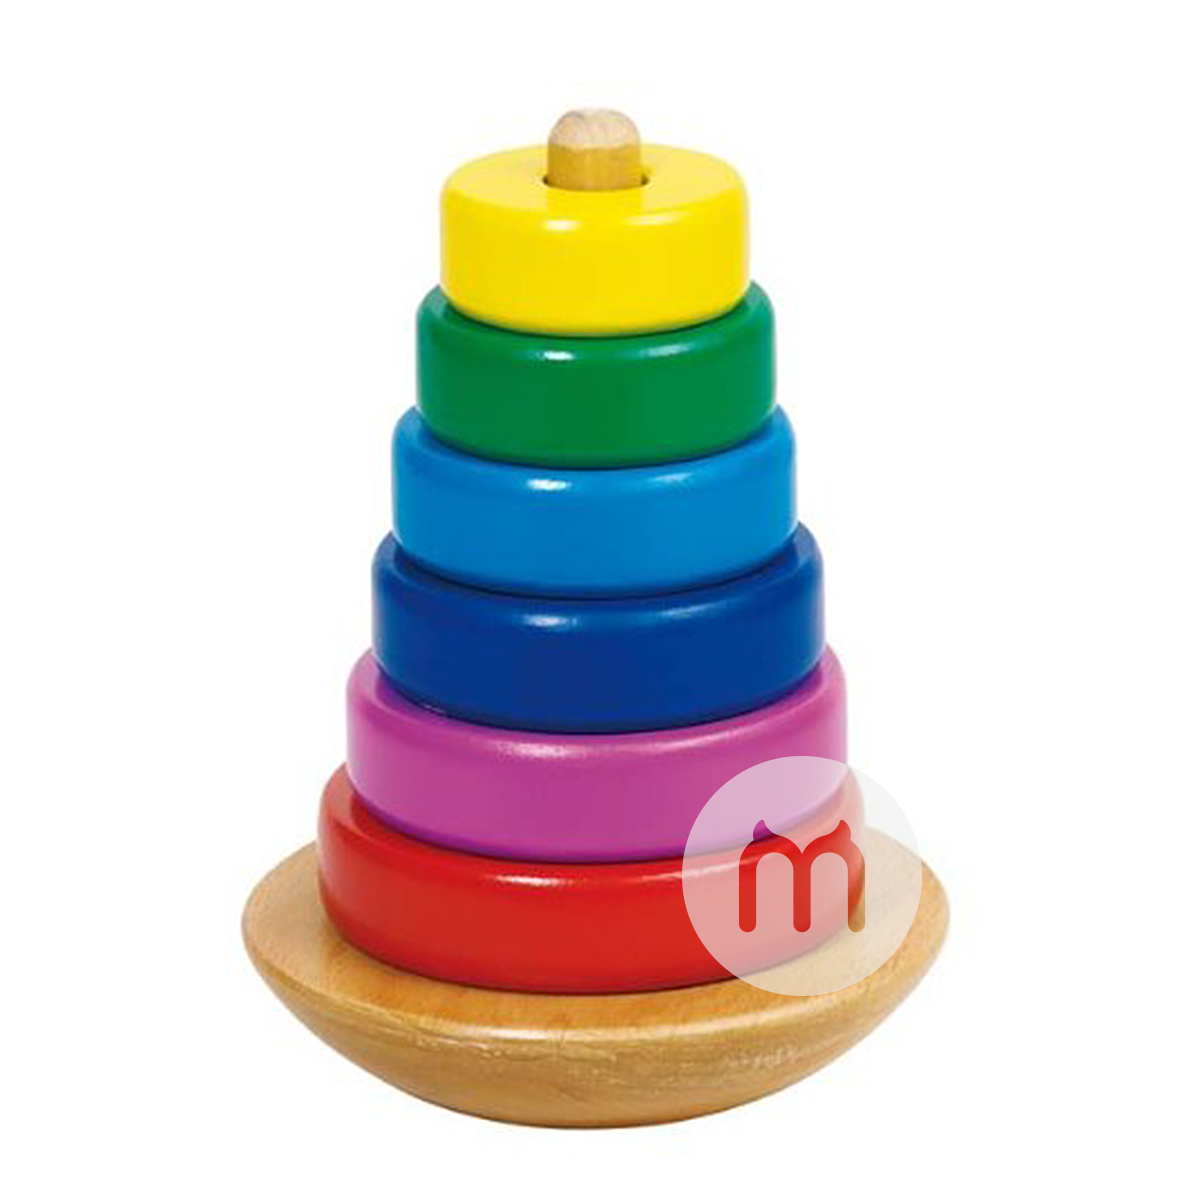 Goki Germany baby stack tower toy